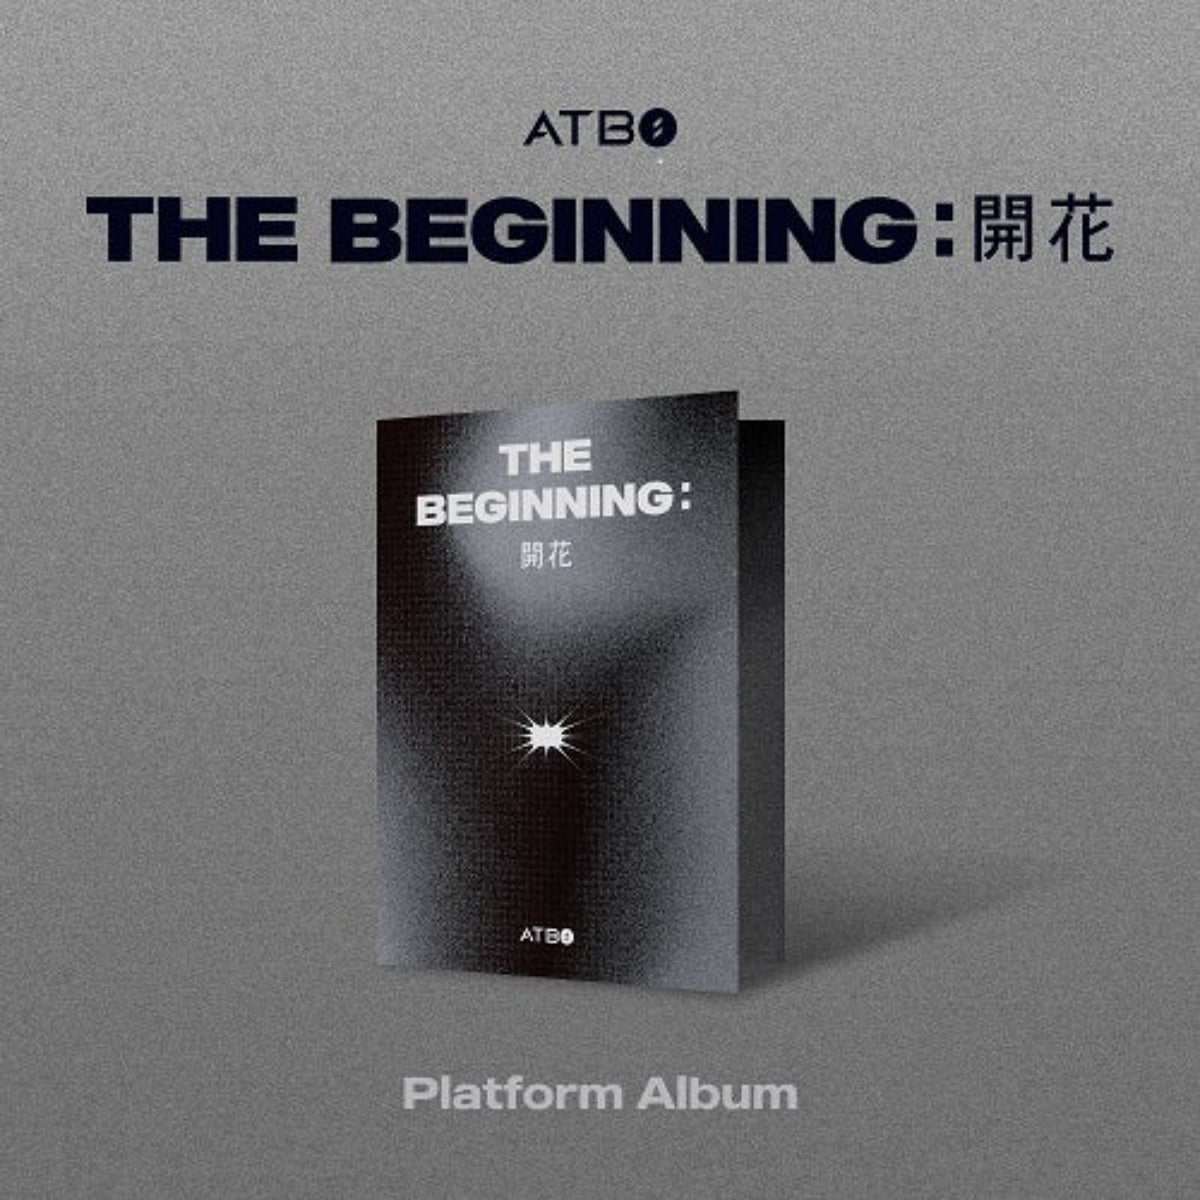 ATBO DEBUT ALBUM - The Beginning 開花 (Platform Version)